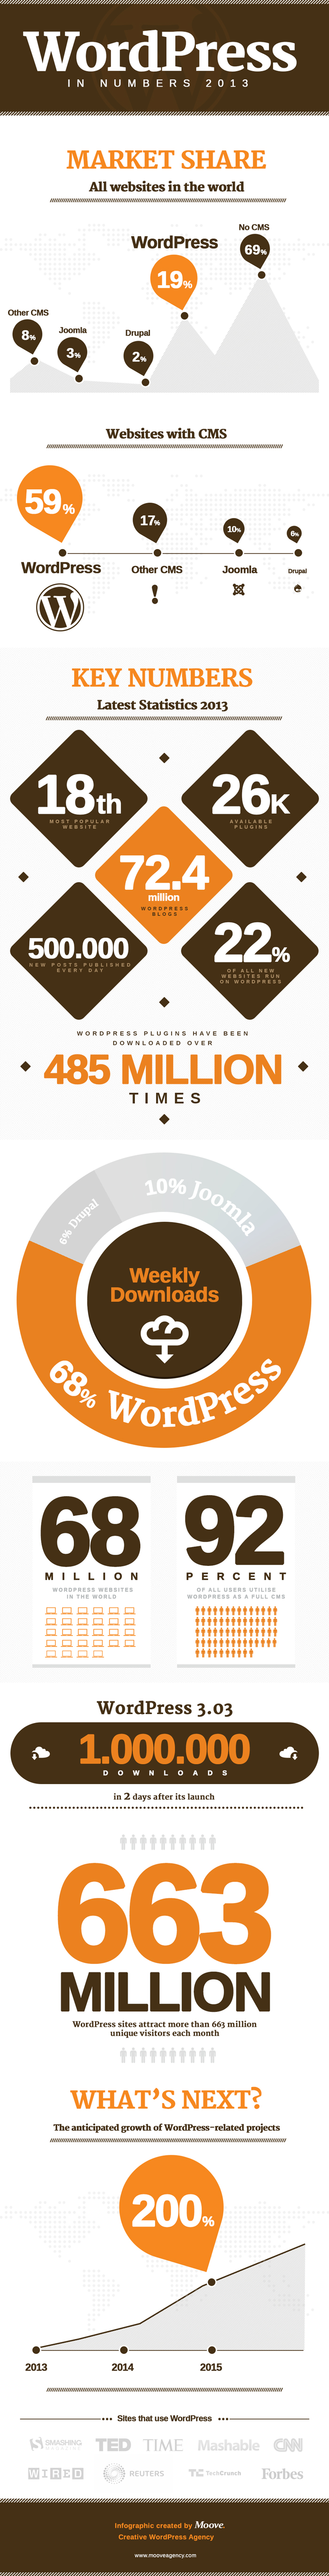 WordPress_Infographic_2013